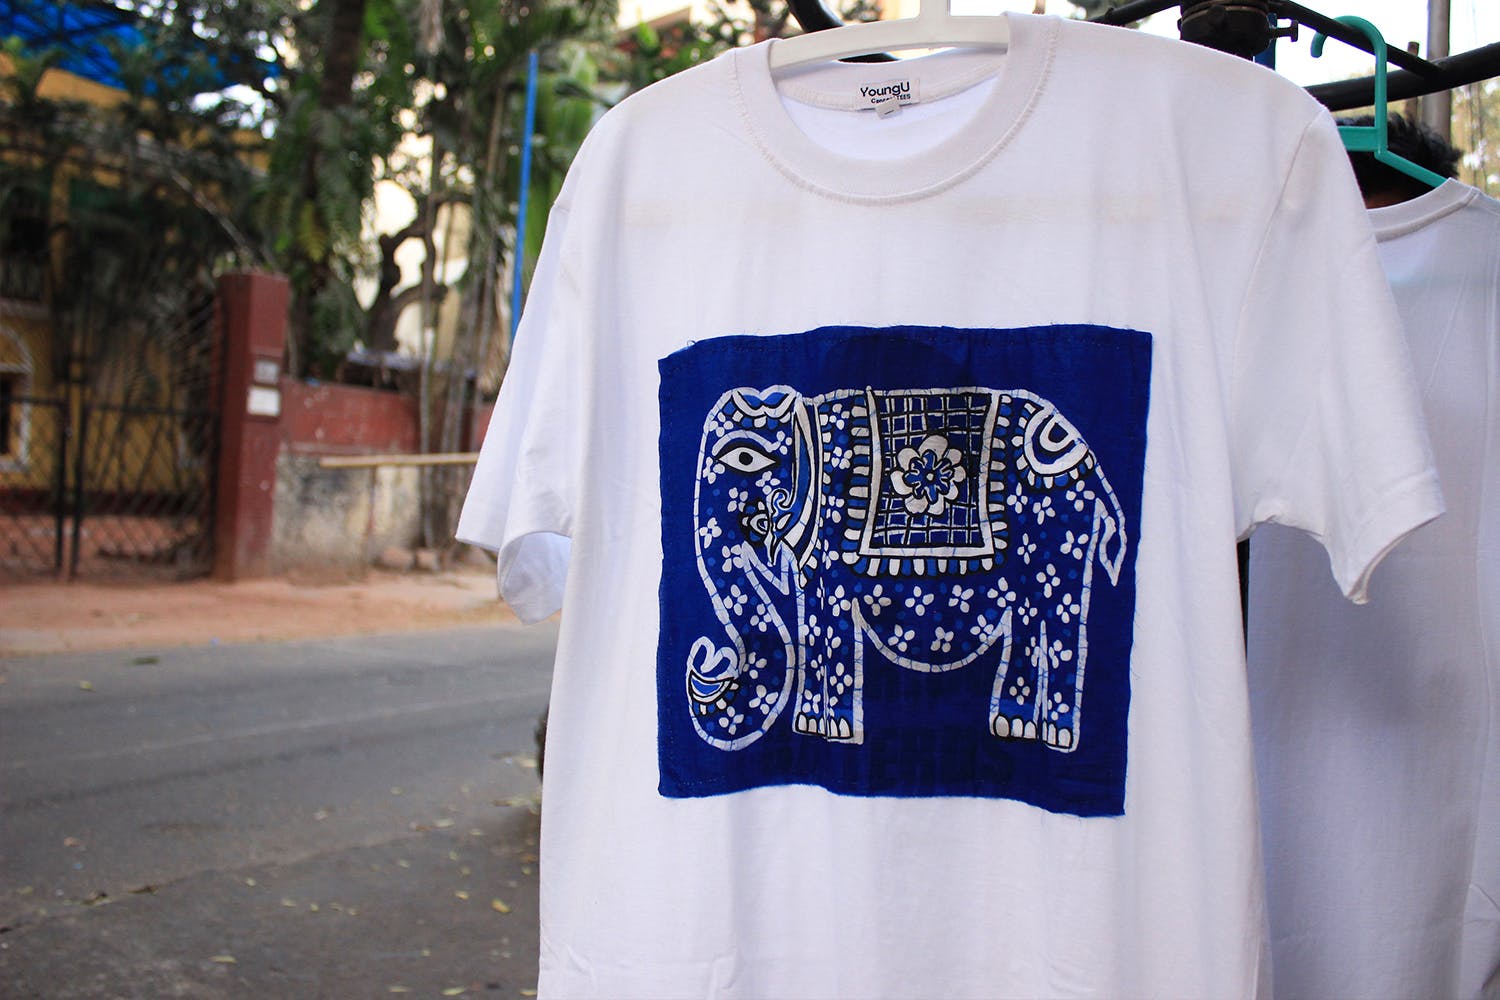 White,T-shirt,Clothing,Blue,Sleeve,Cobalt blue,Top,Design,Neck,Active shirt